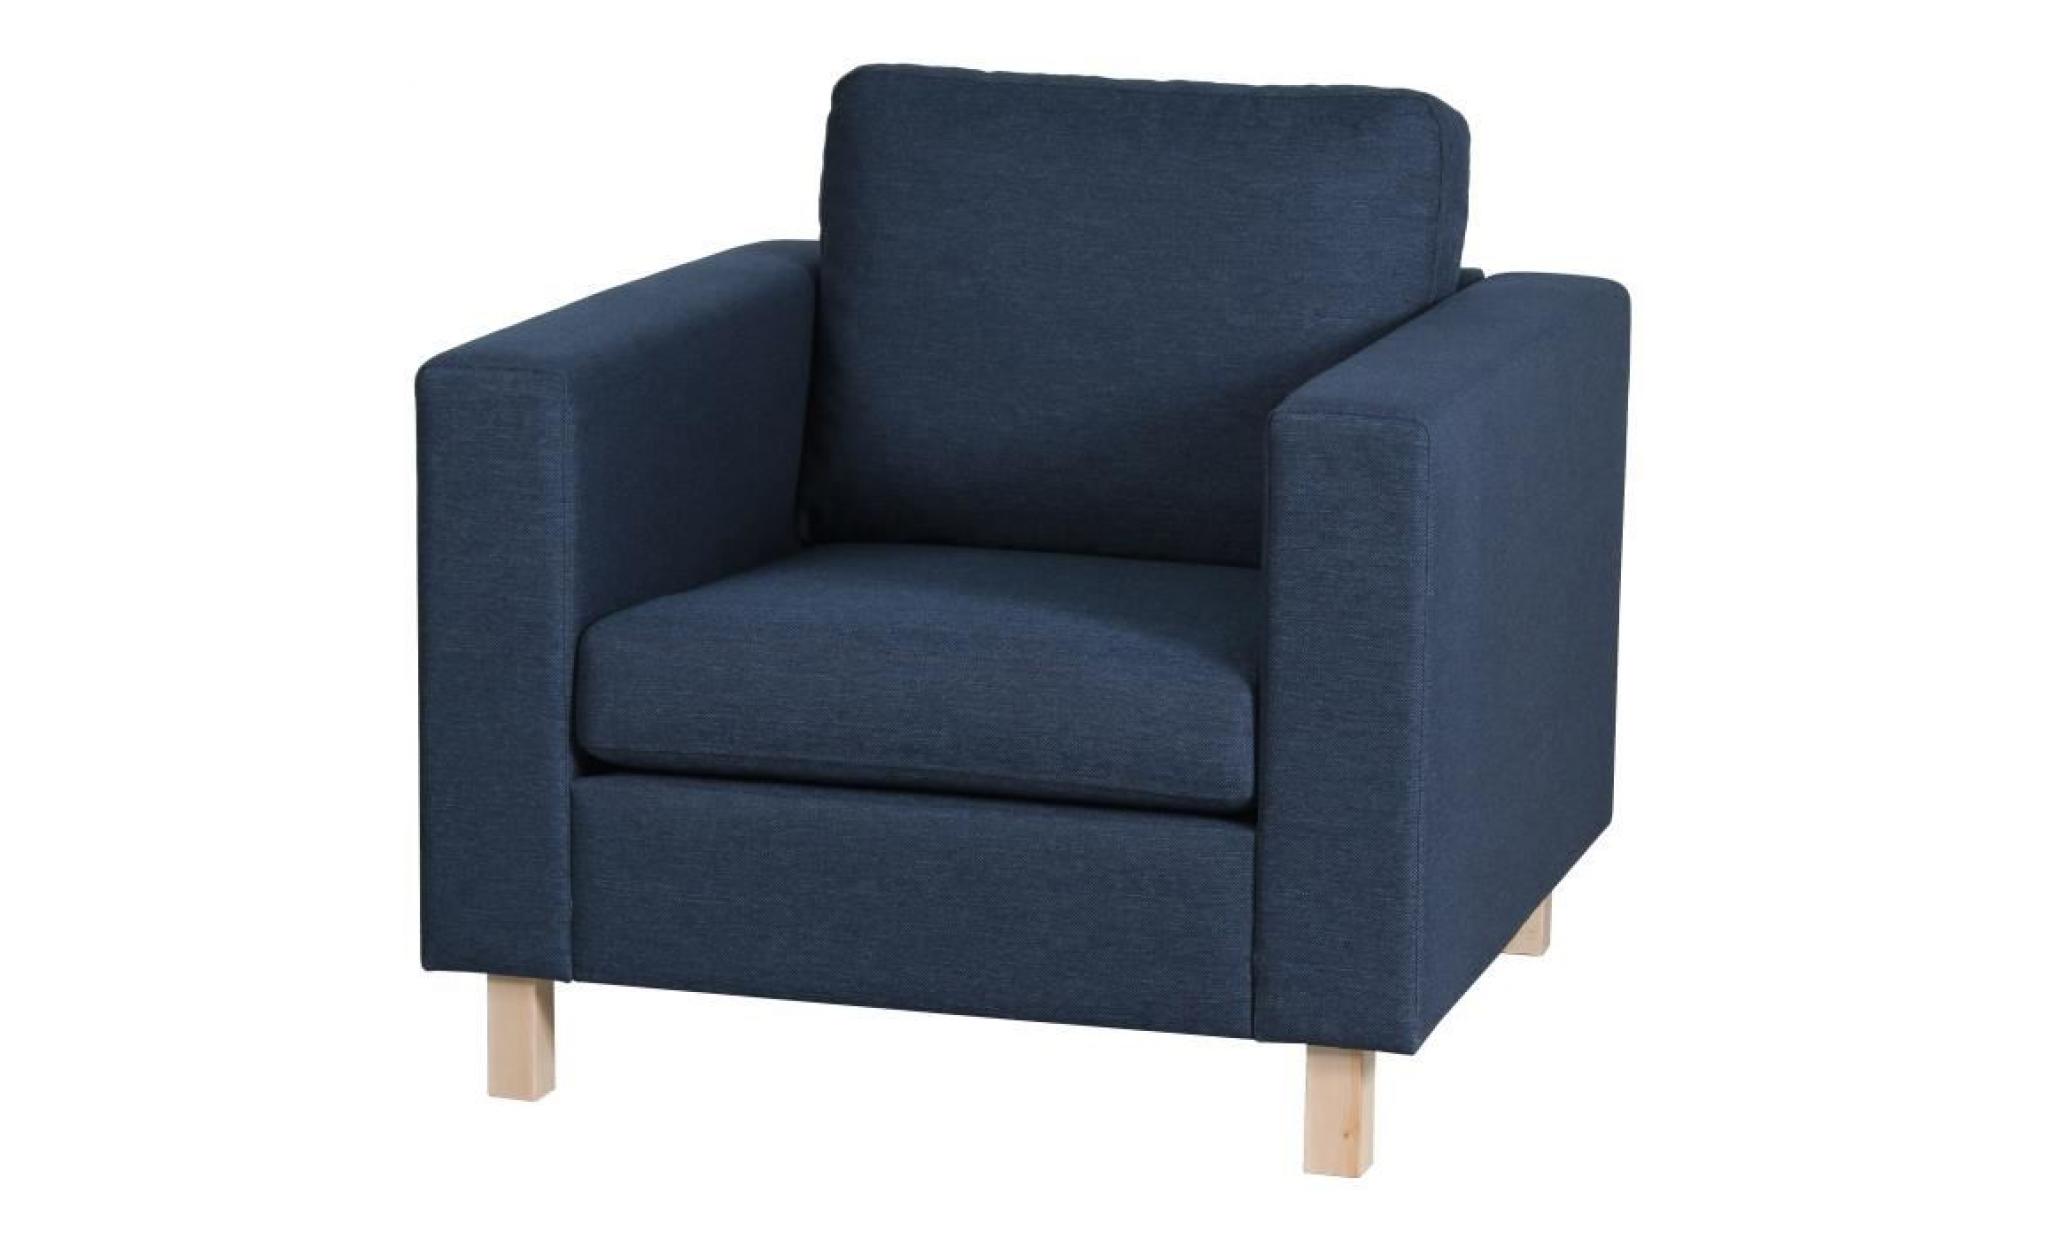 finlandek fauteuil sven   tissu bleu   scandinave   l 92 x p 92 cm